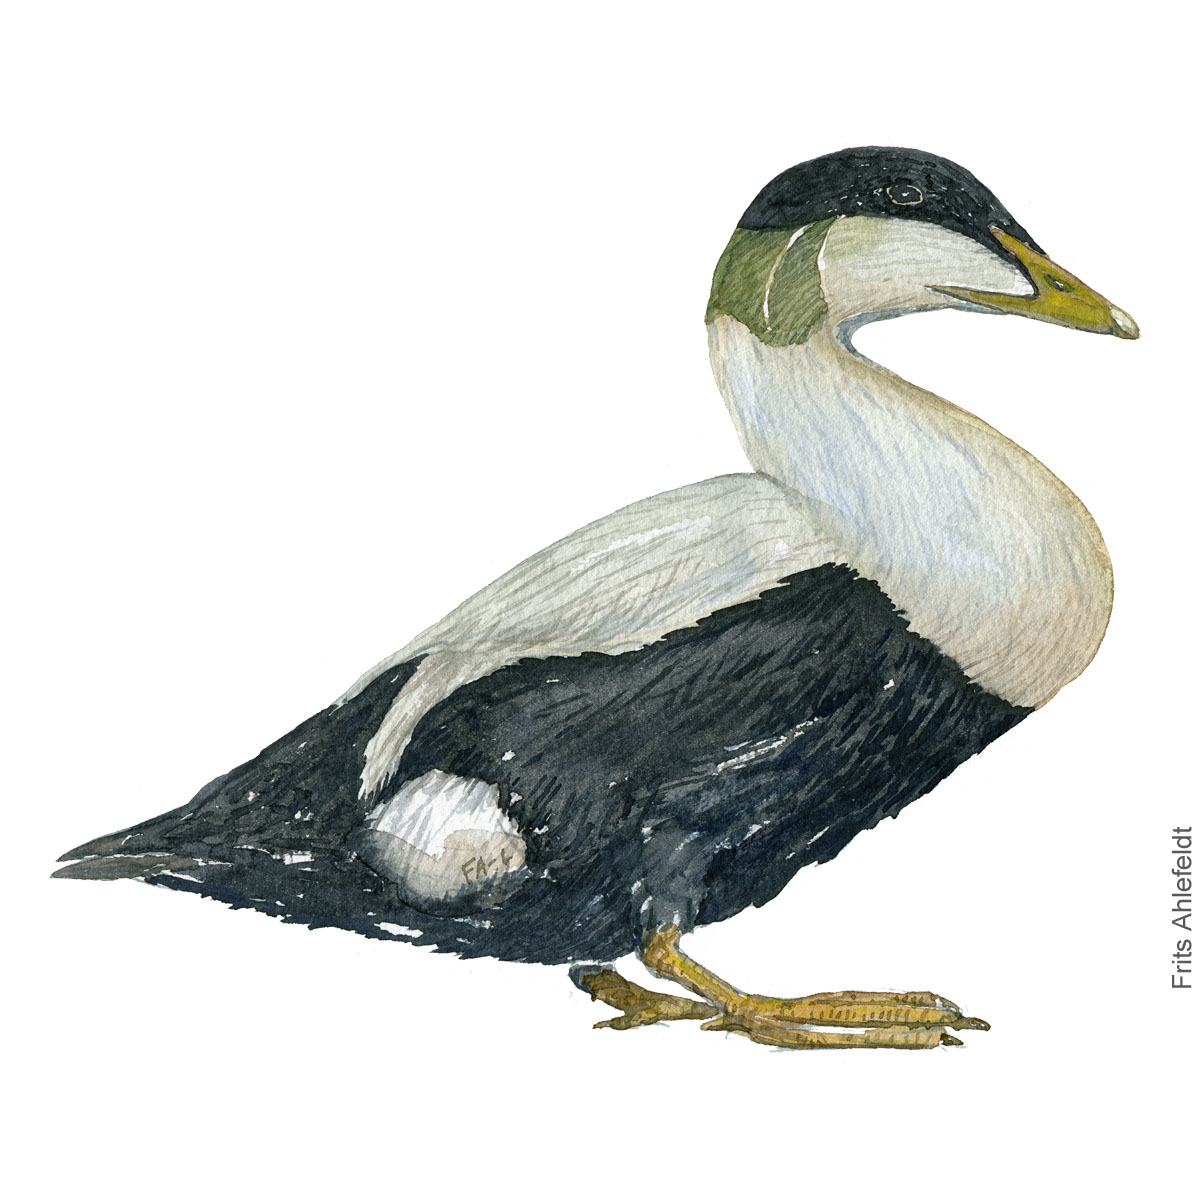 Edderfugl - Common eider duck - Bird painting in watercolor by Frits Ahlefeldt - Fugle akvarel